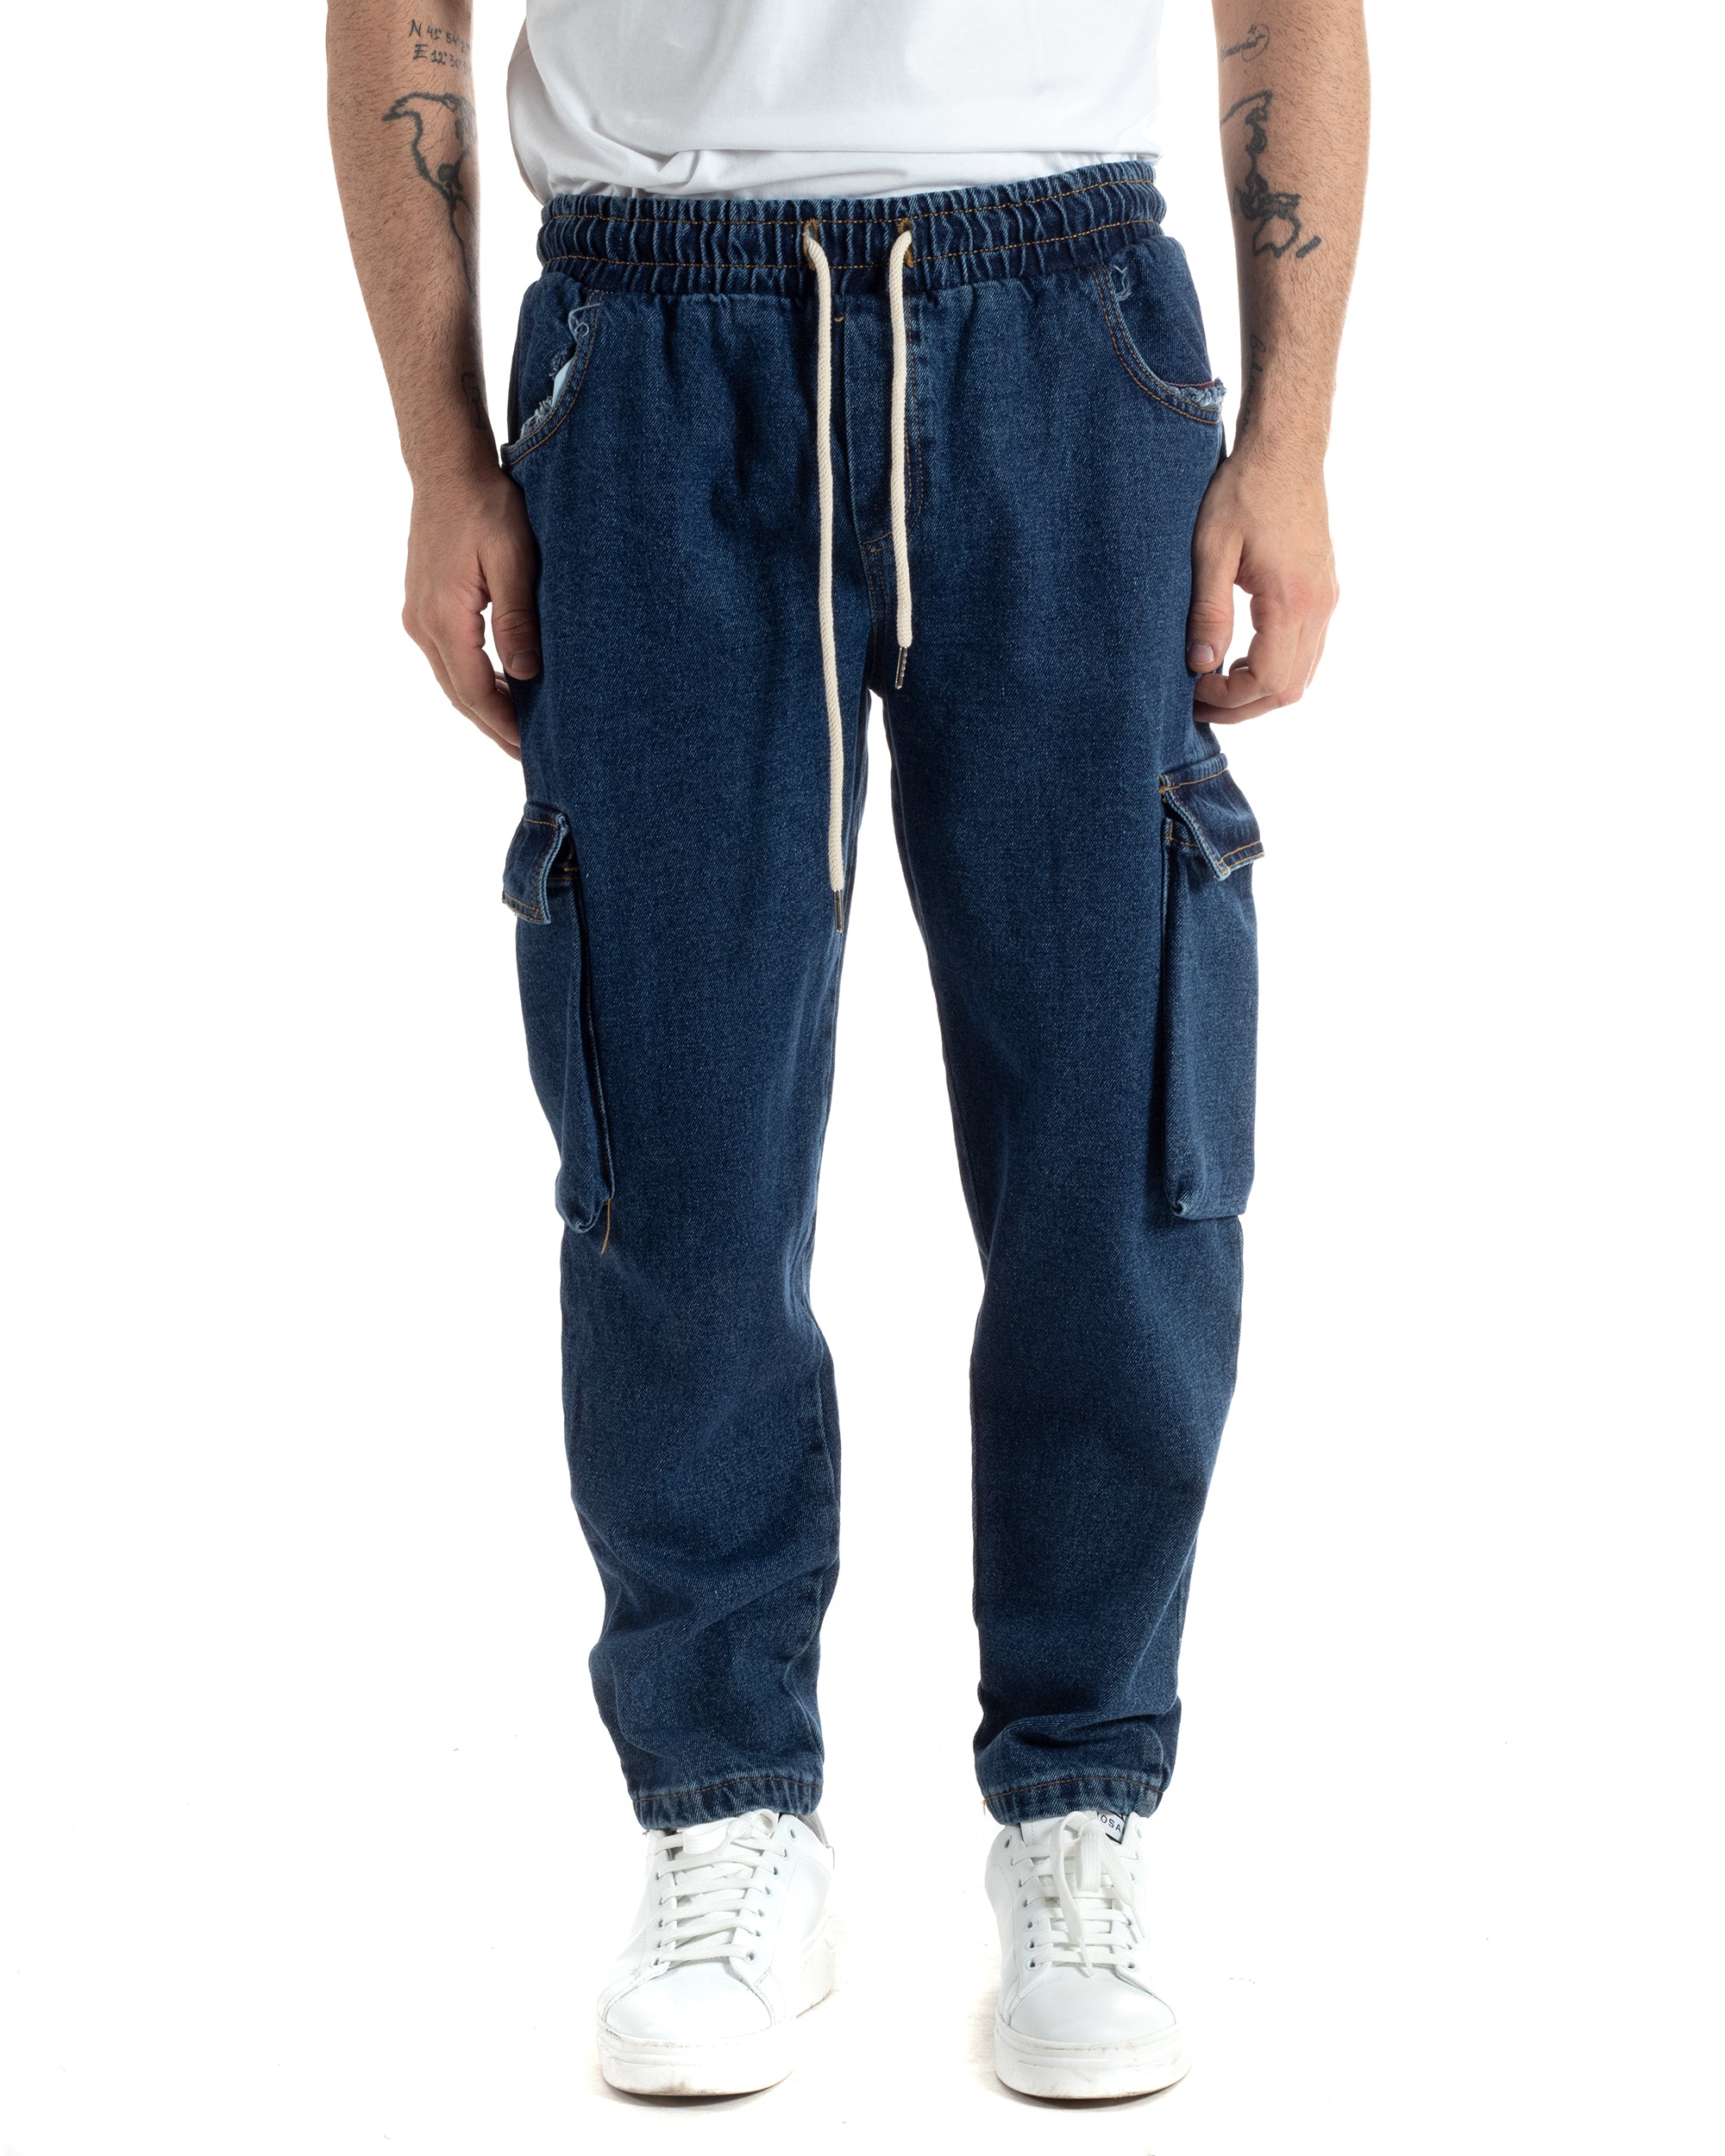 Pantaloni Uomo Pantalaccio Con Tasconi Jeans Cargo Coulisse Denim Scuro Loose Fit GIOSAL-JS1003A